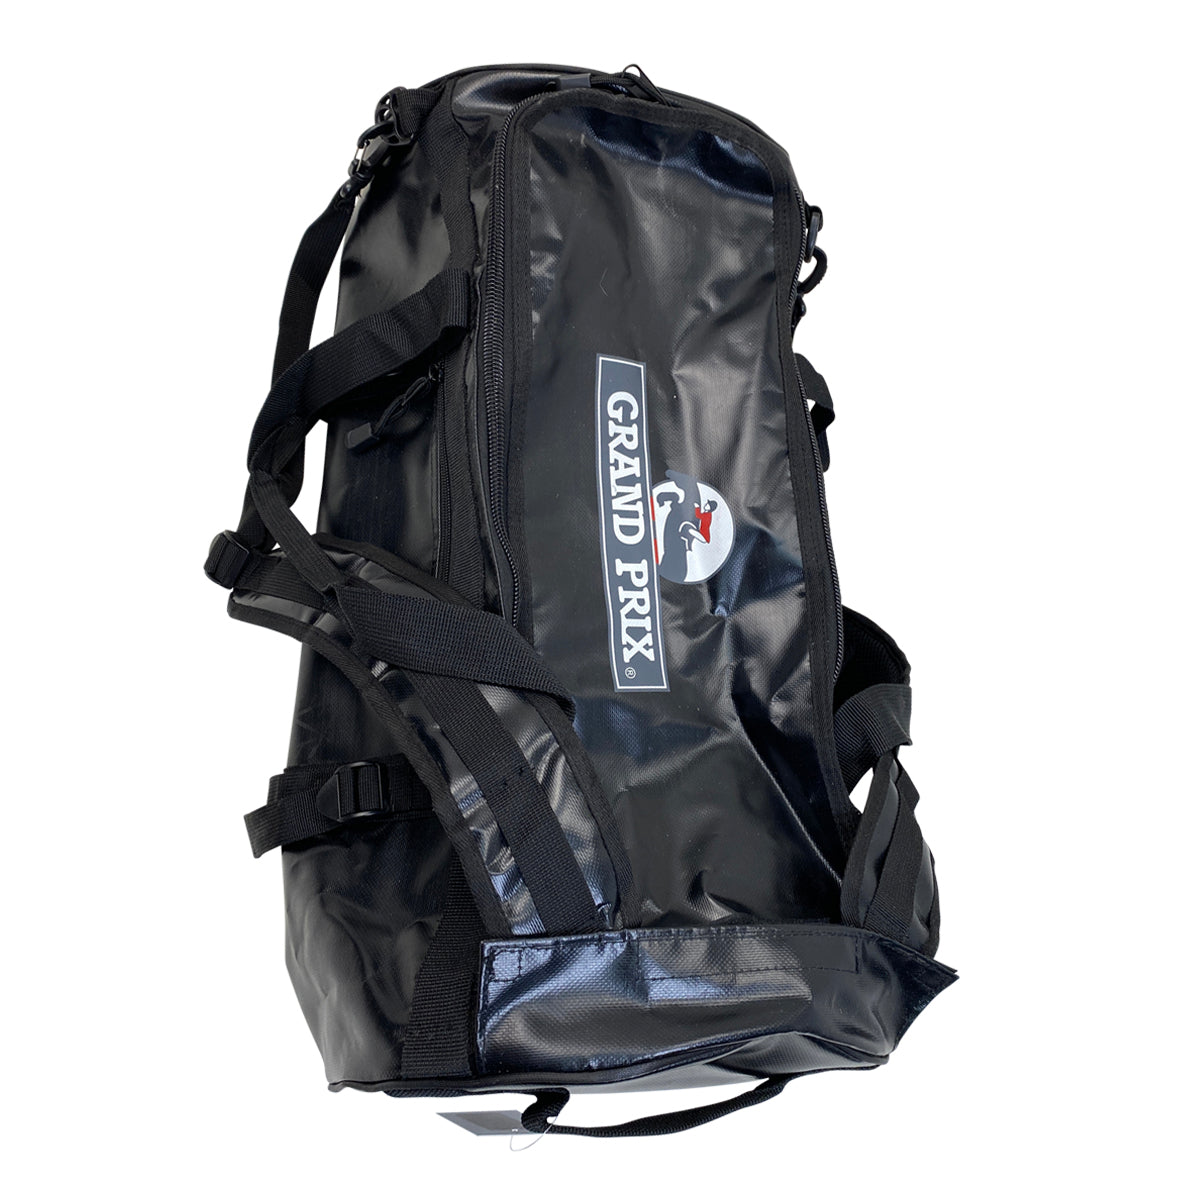 Grand Prix 2-in-1 Duffle Backpack in Black